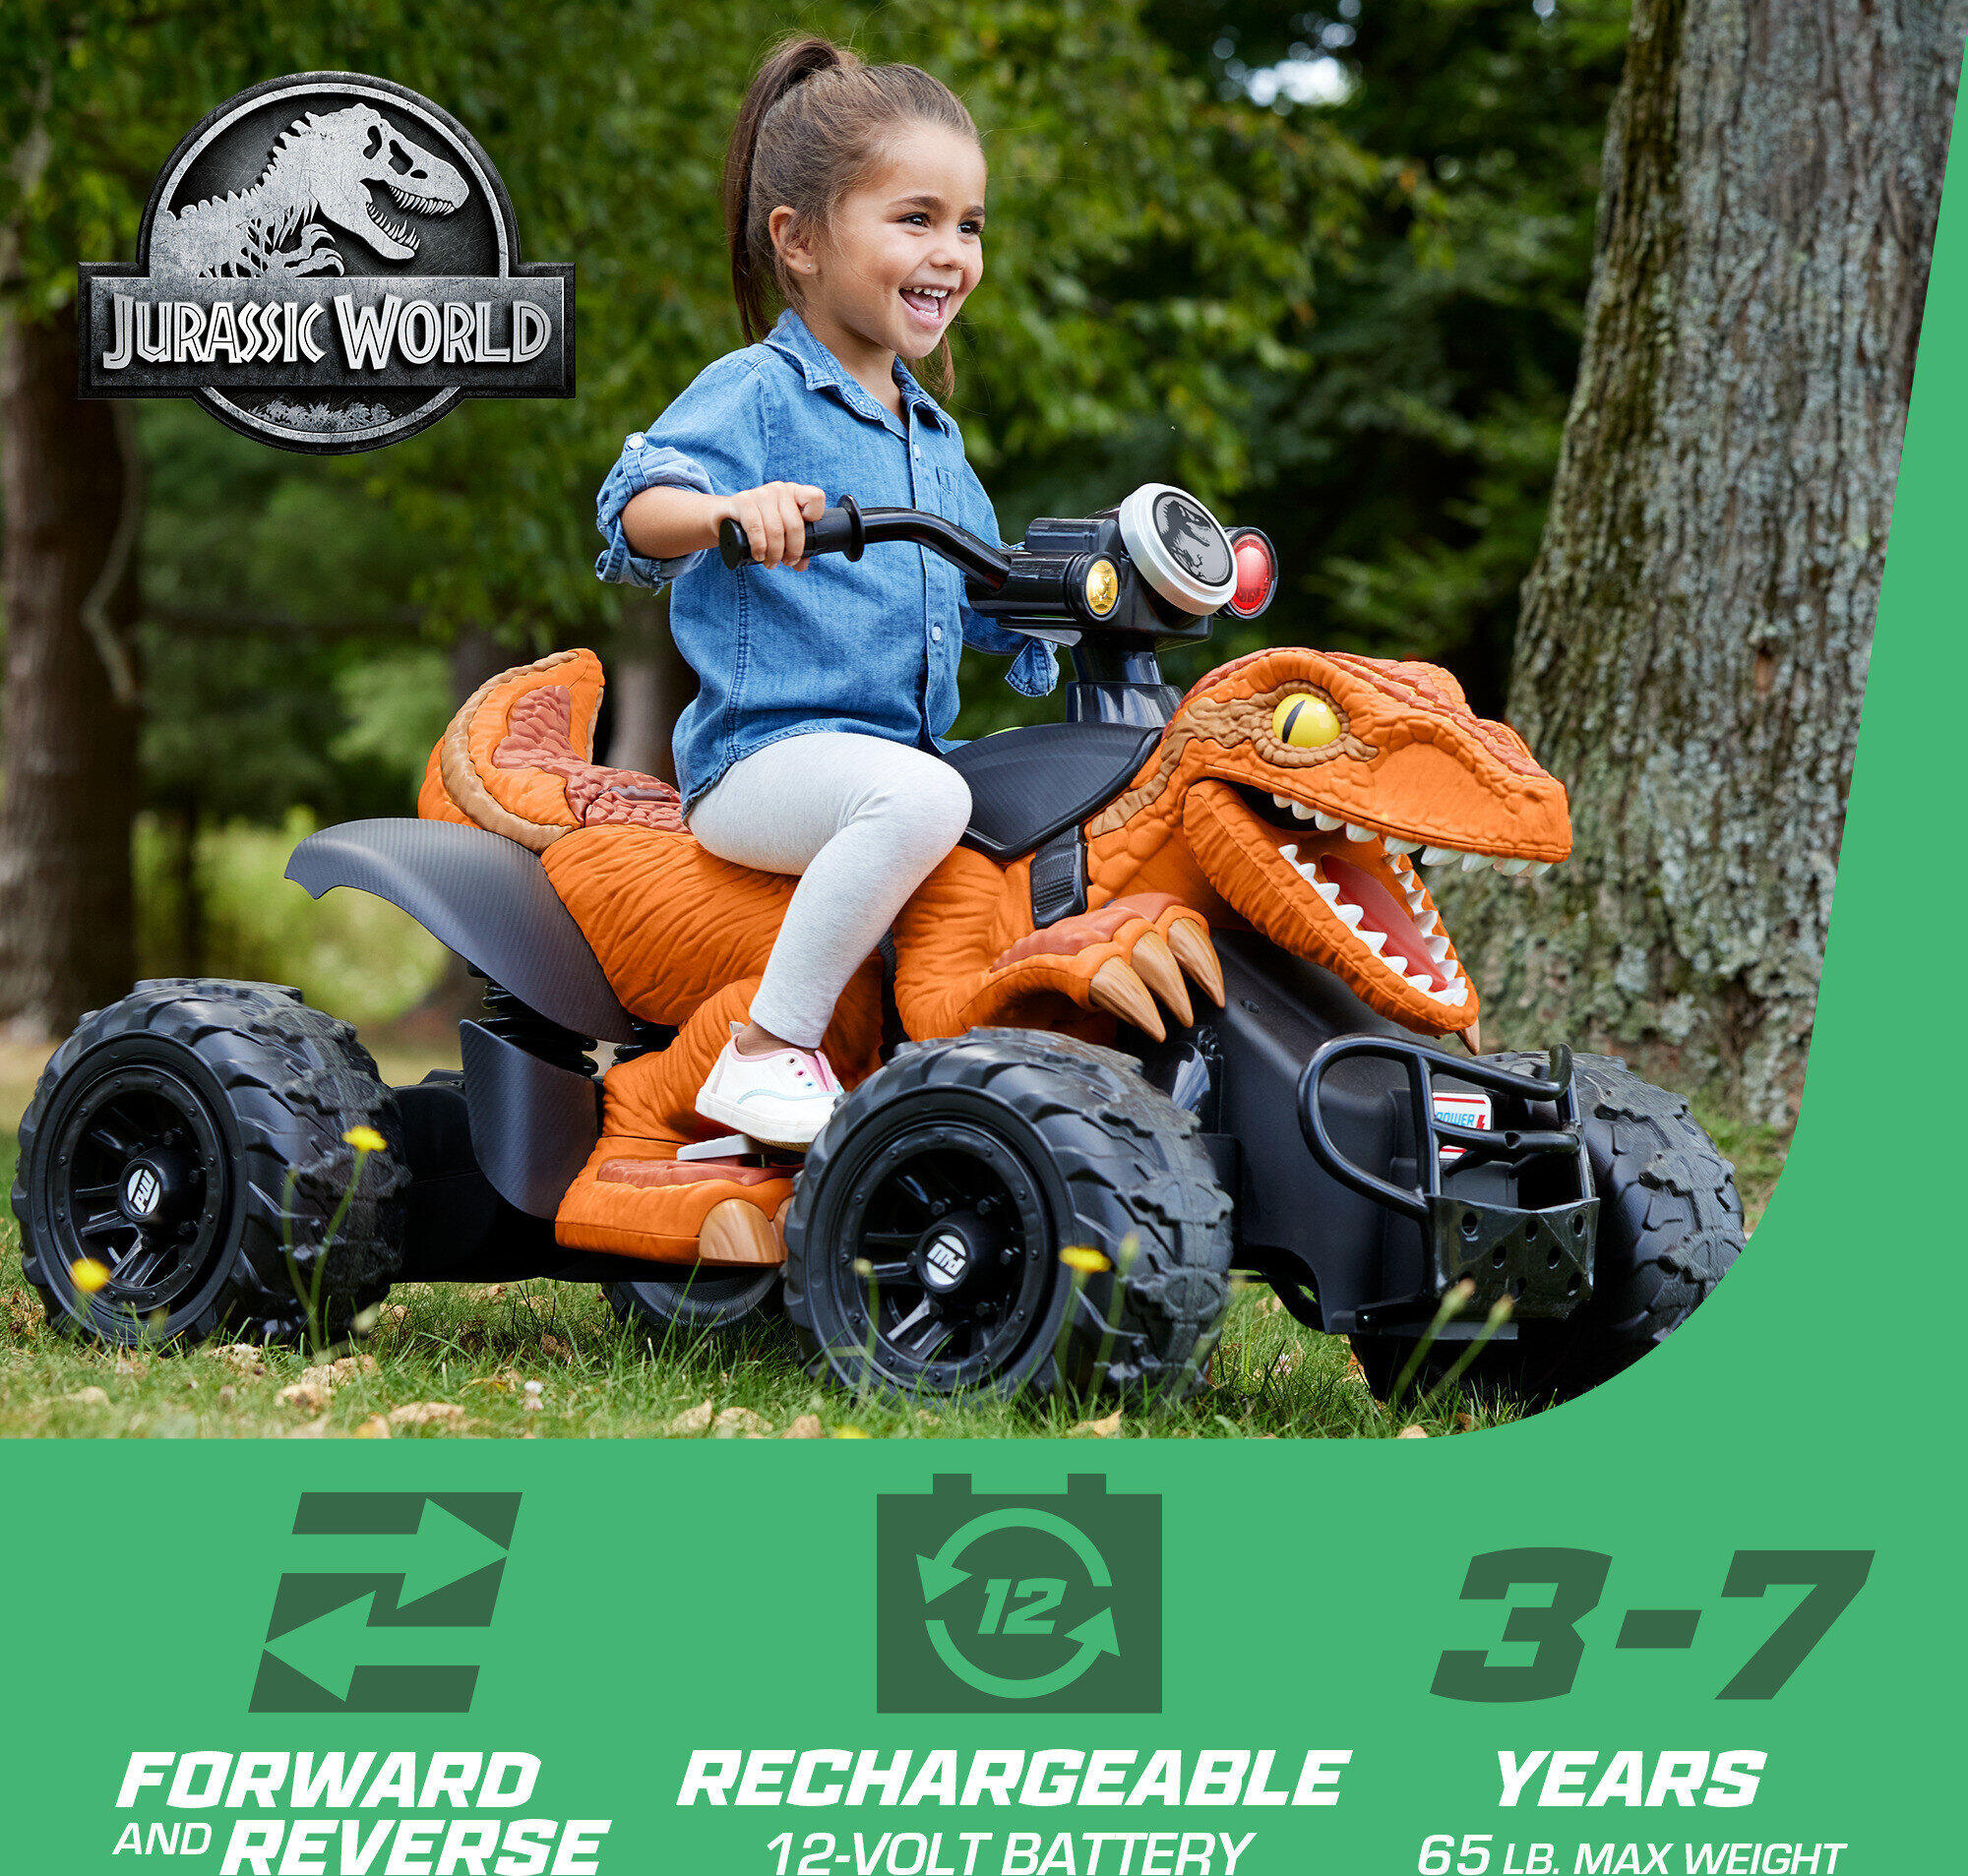 12V Power Wheels Jurassic World Dino Racer Battery-Powered Ride-On ATV Dinosaur Toy, Orange - image 3 of 7